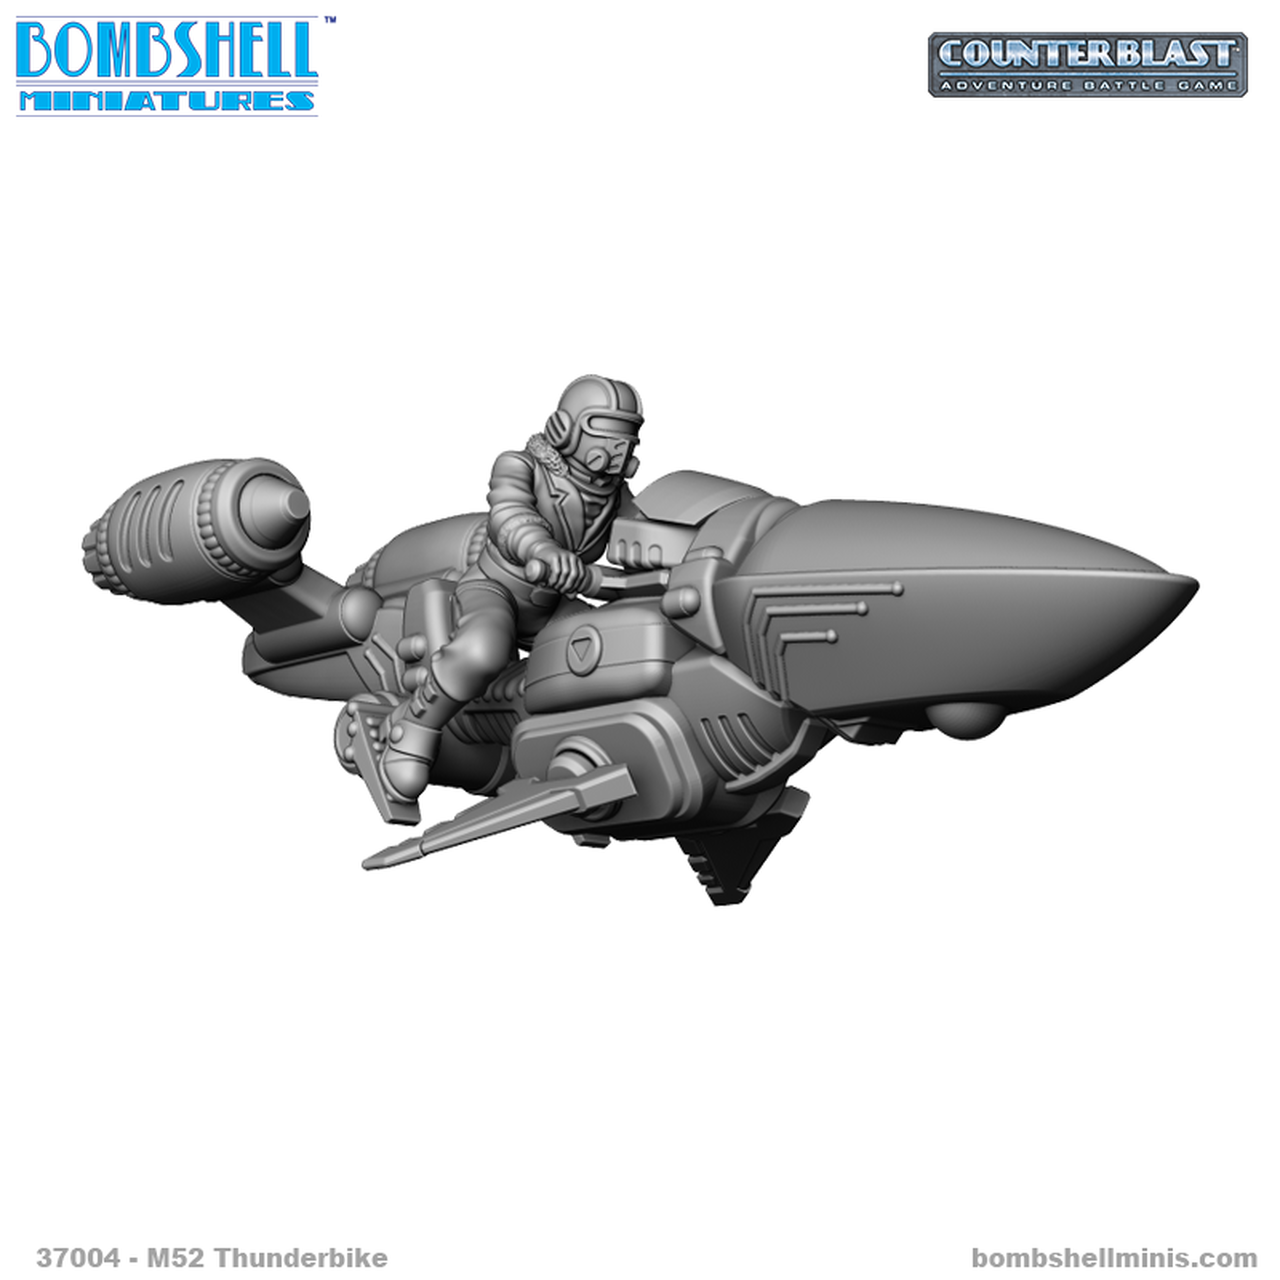 BM-Bombshell-M52-Thunderbike.png.8655d0aa6f3a34862ffb0e94e8c3efef.png